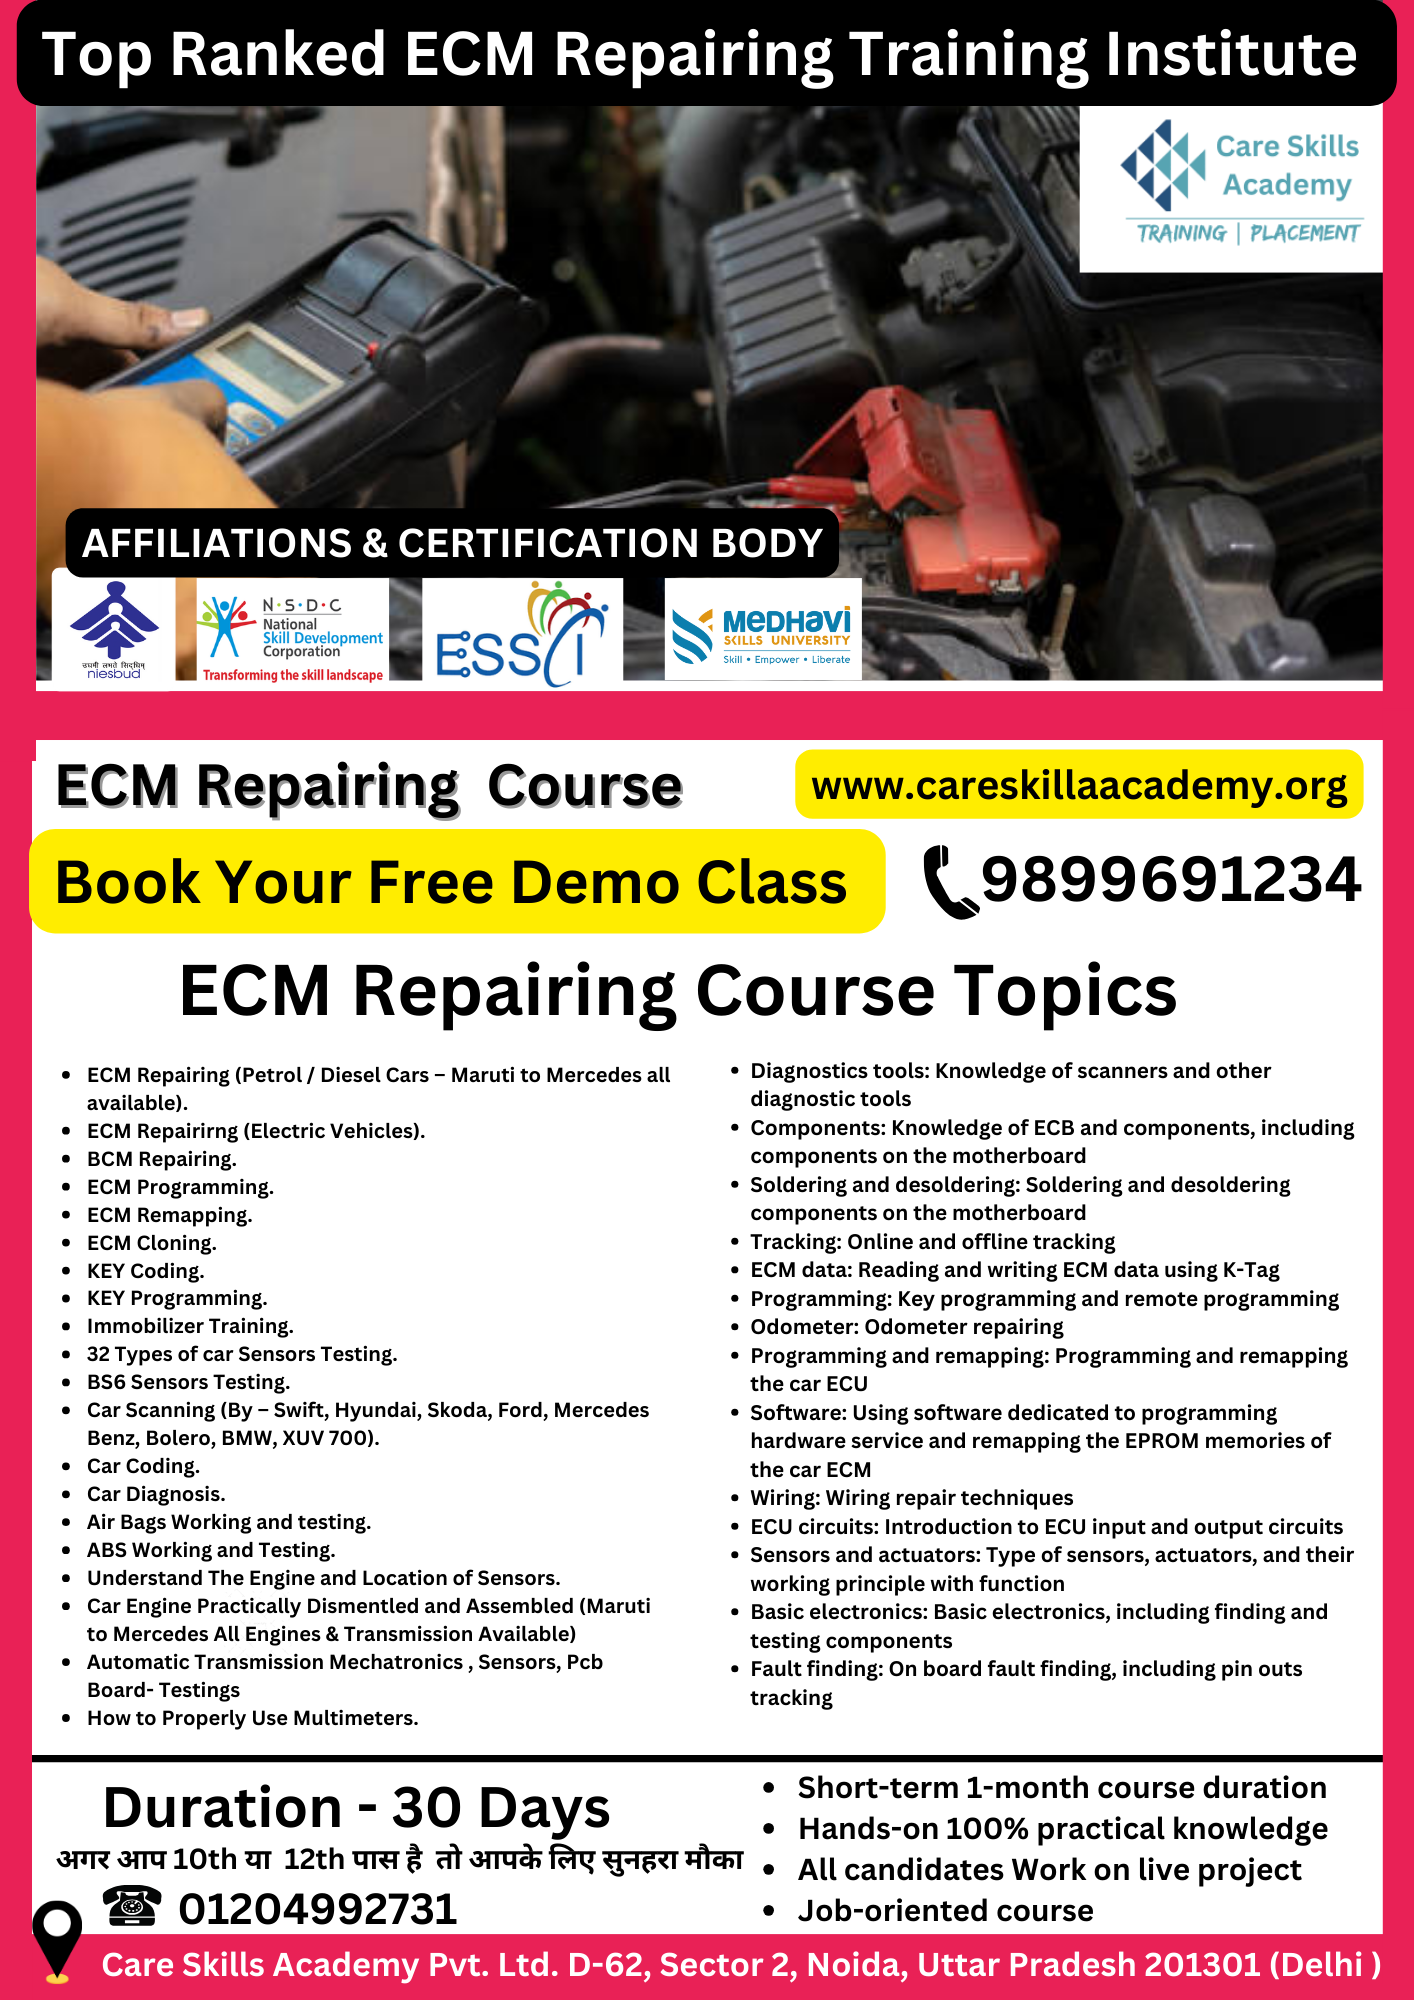 The Best ECM Repairing Course in Delhi at Care Skills Academy